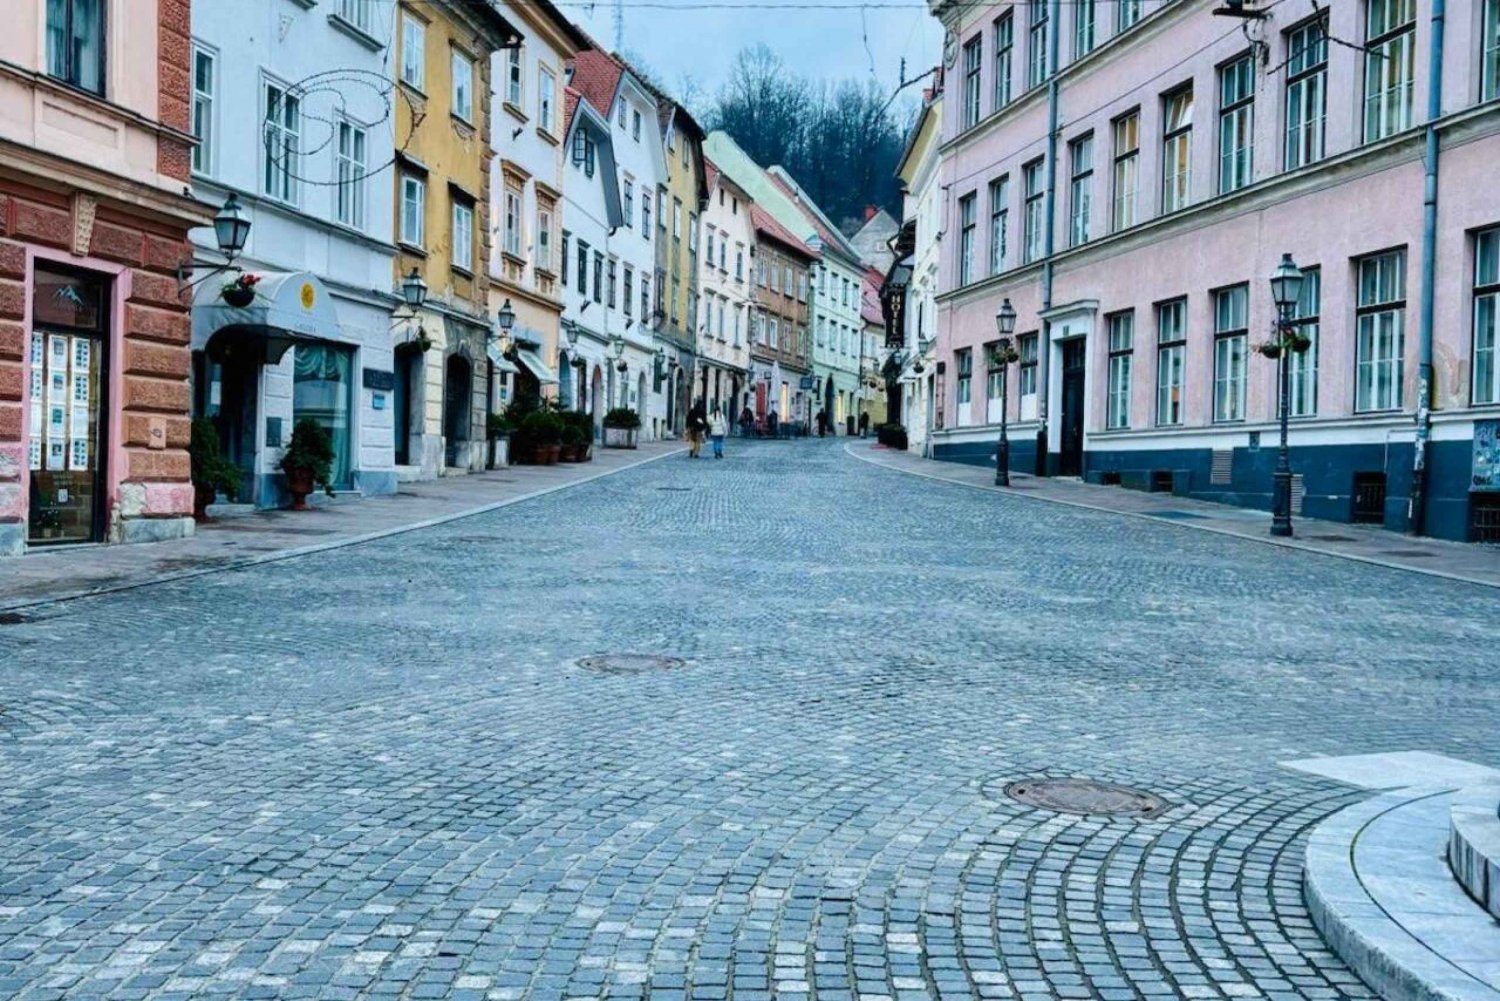 Ljubljana: Secrets of the Old Town & Ljubljana's people